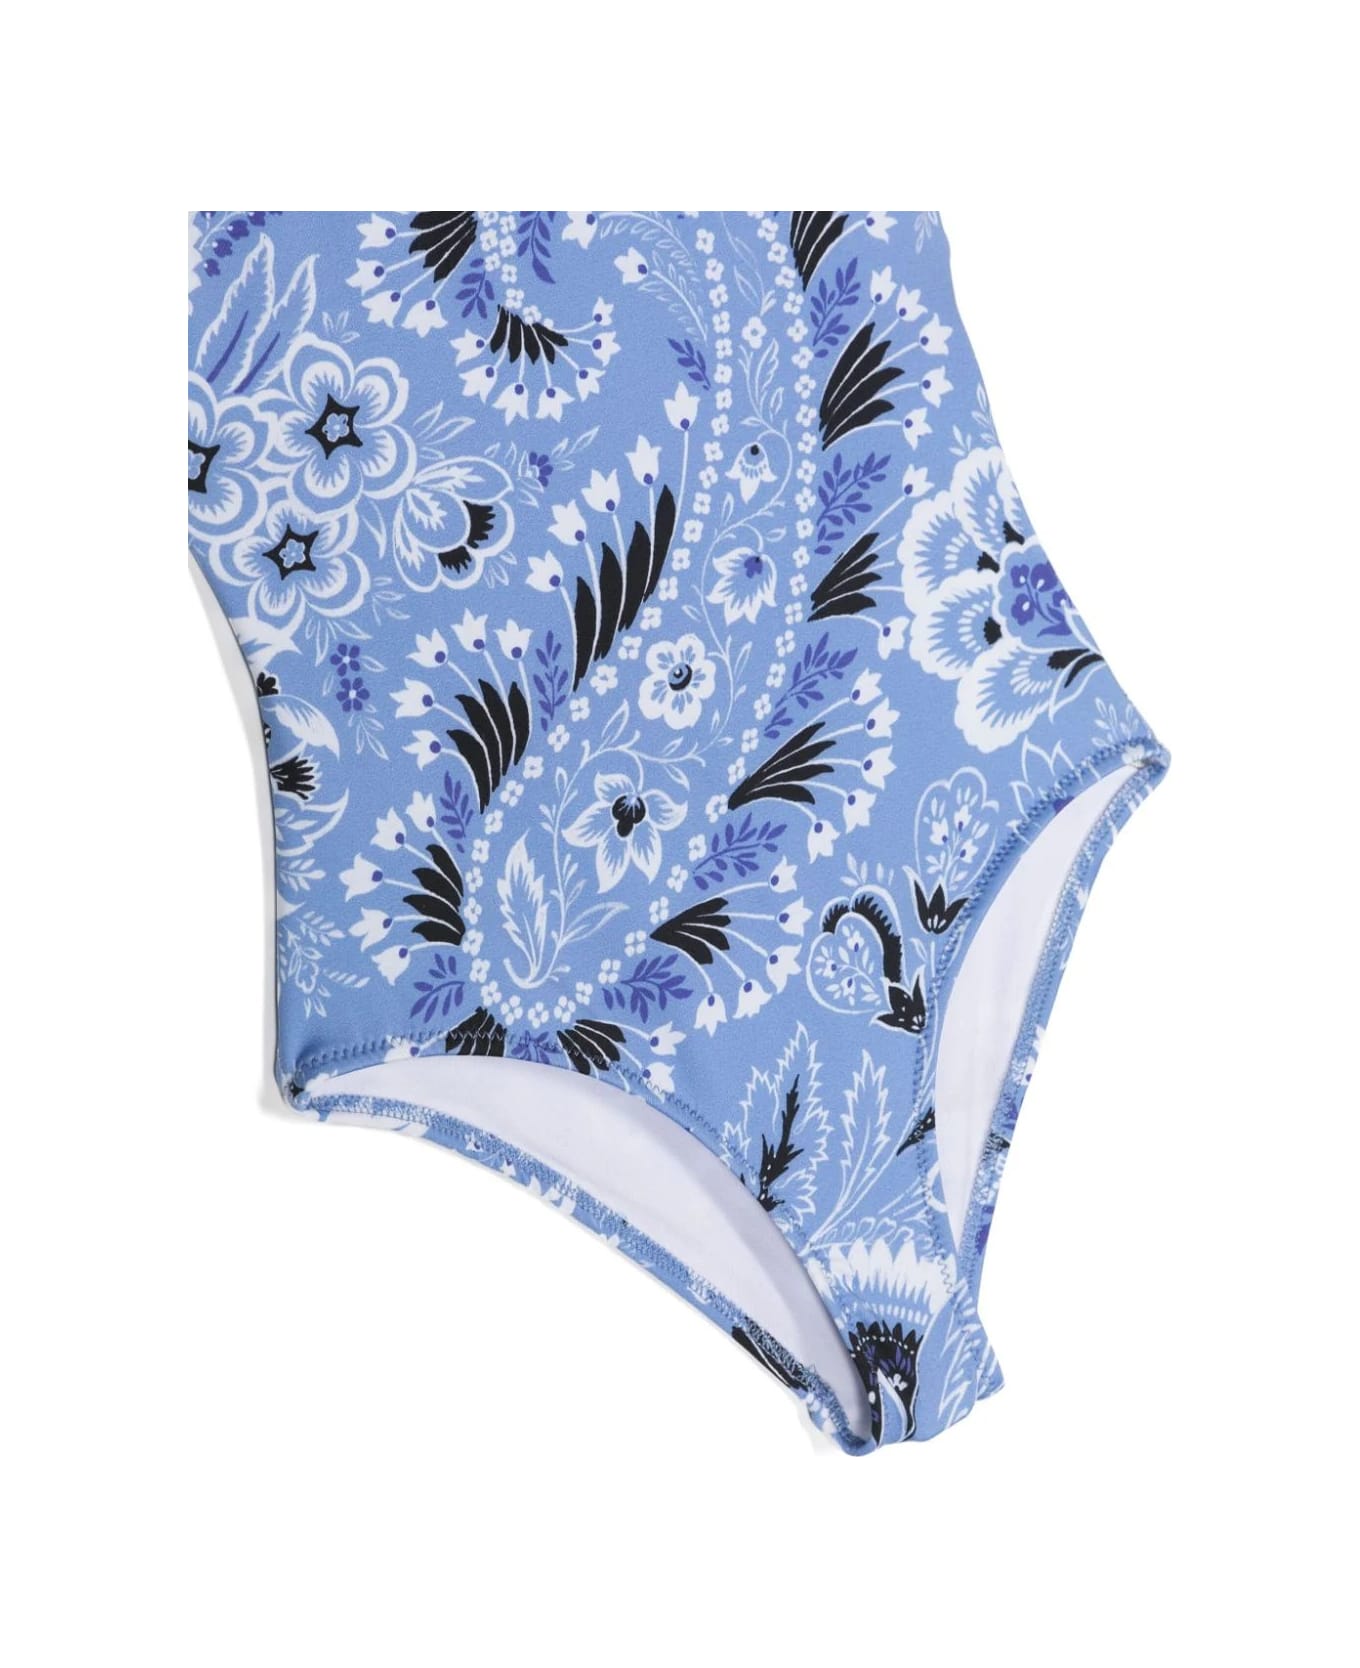 Etro Light Blue Swimwear With Paisley Motif - Blue